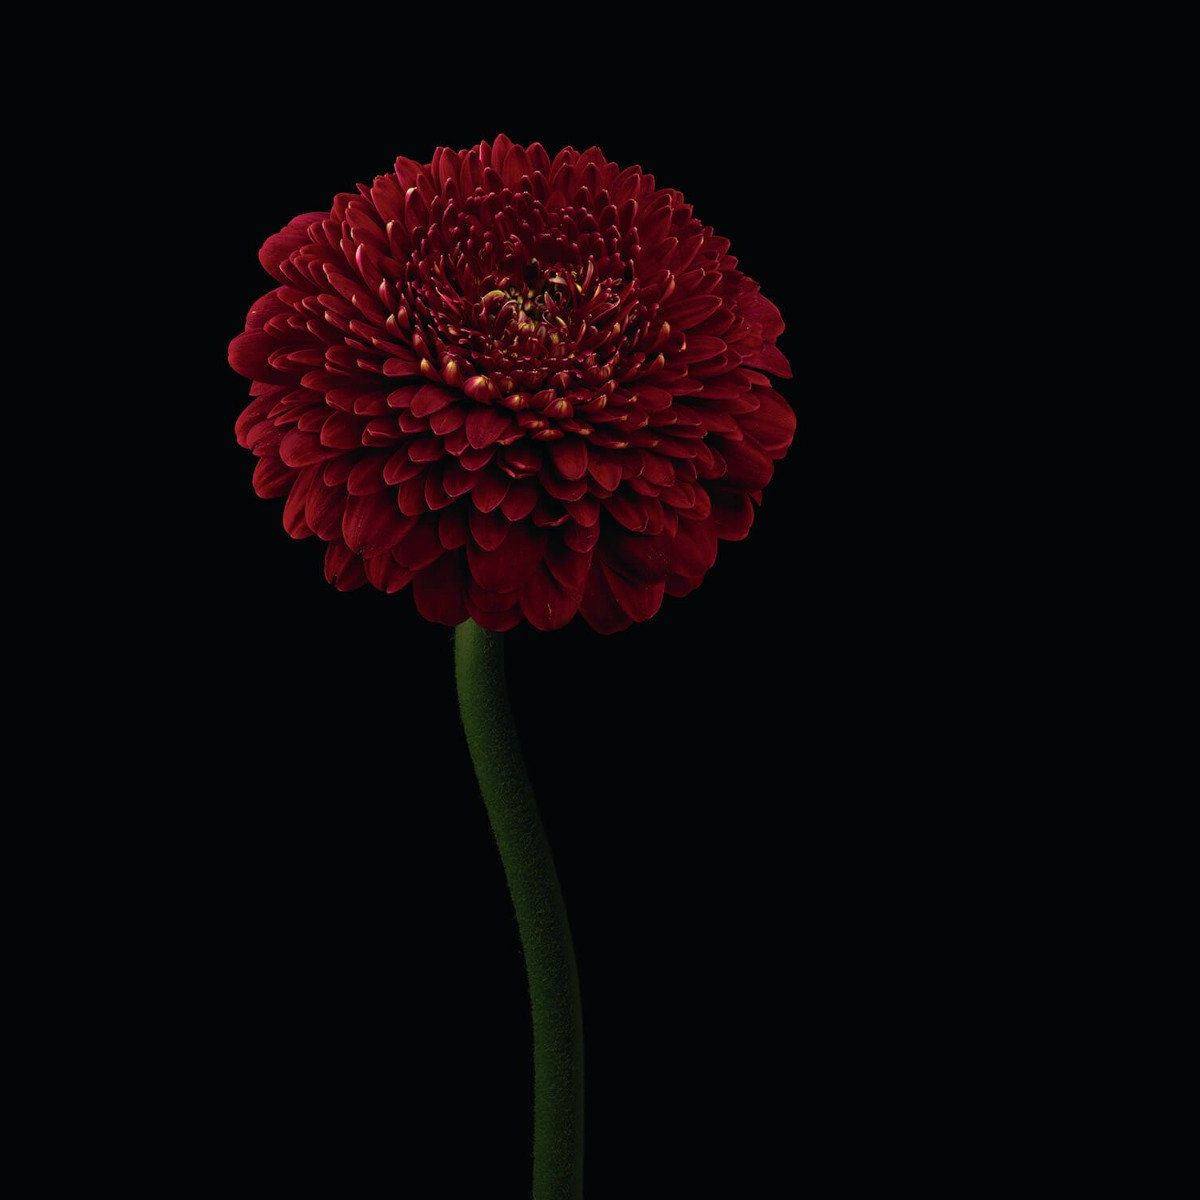 Red flower on stem